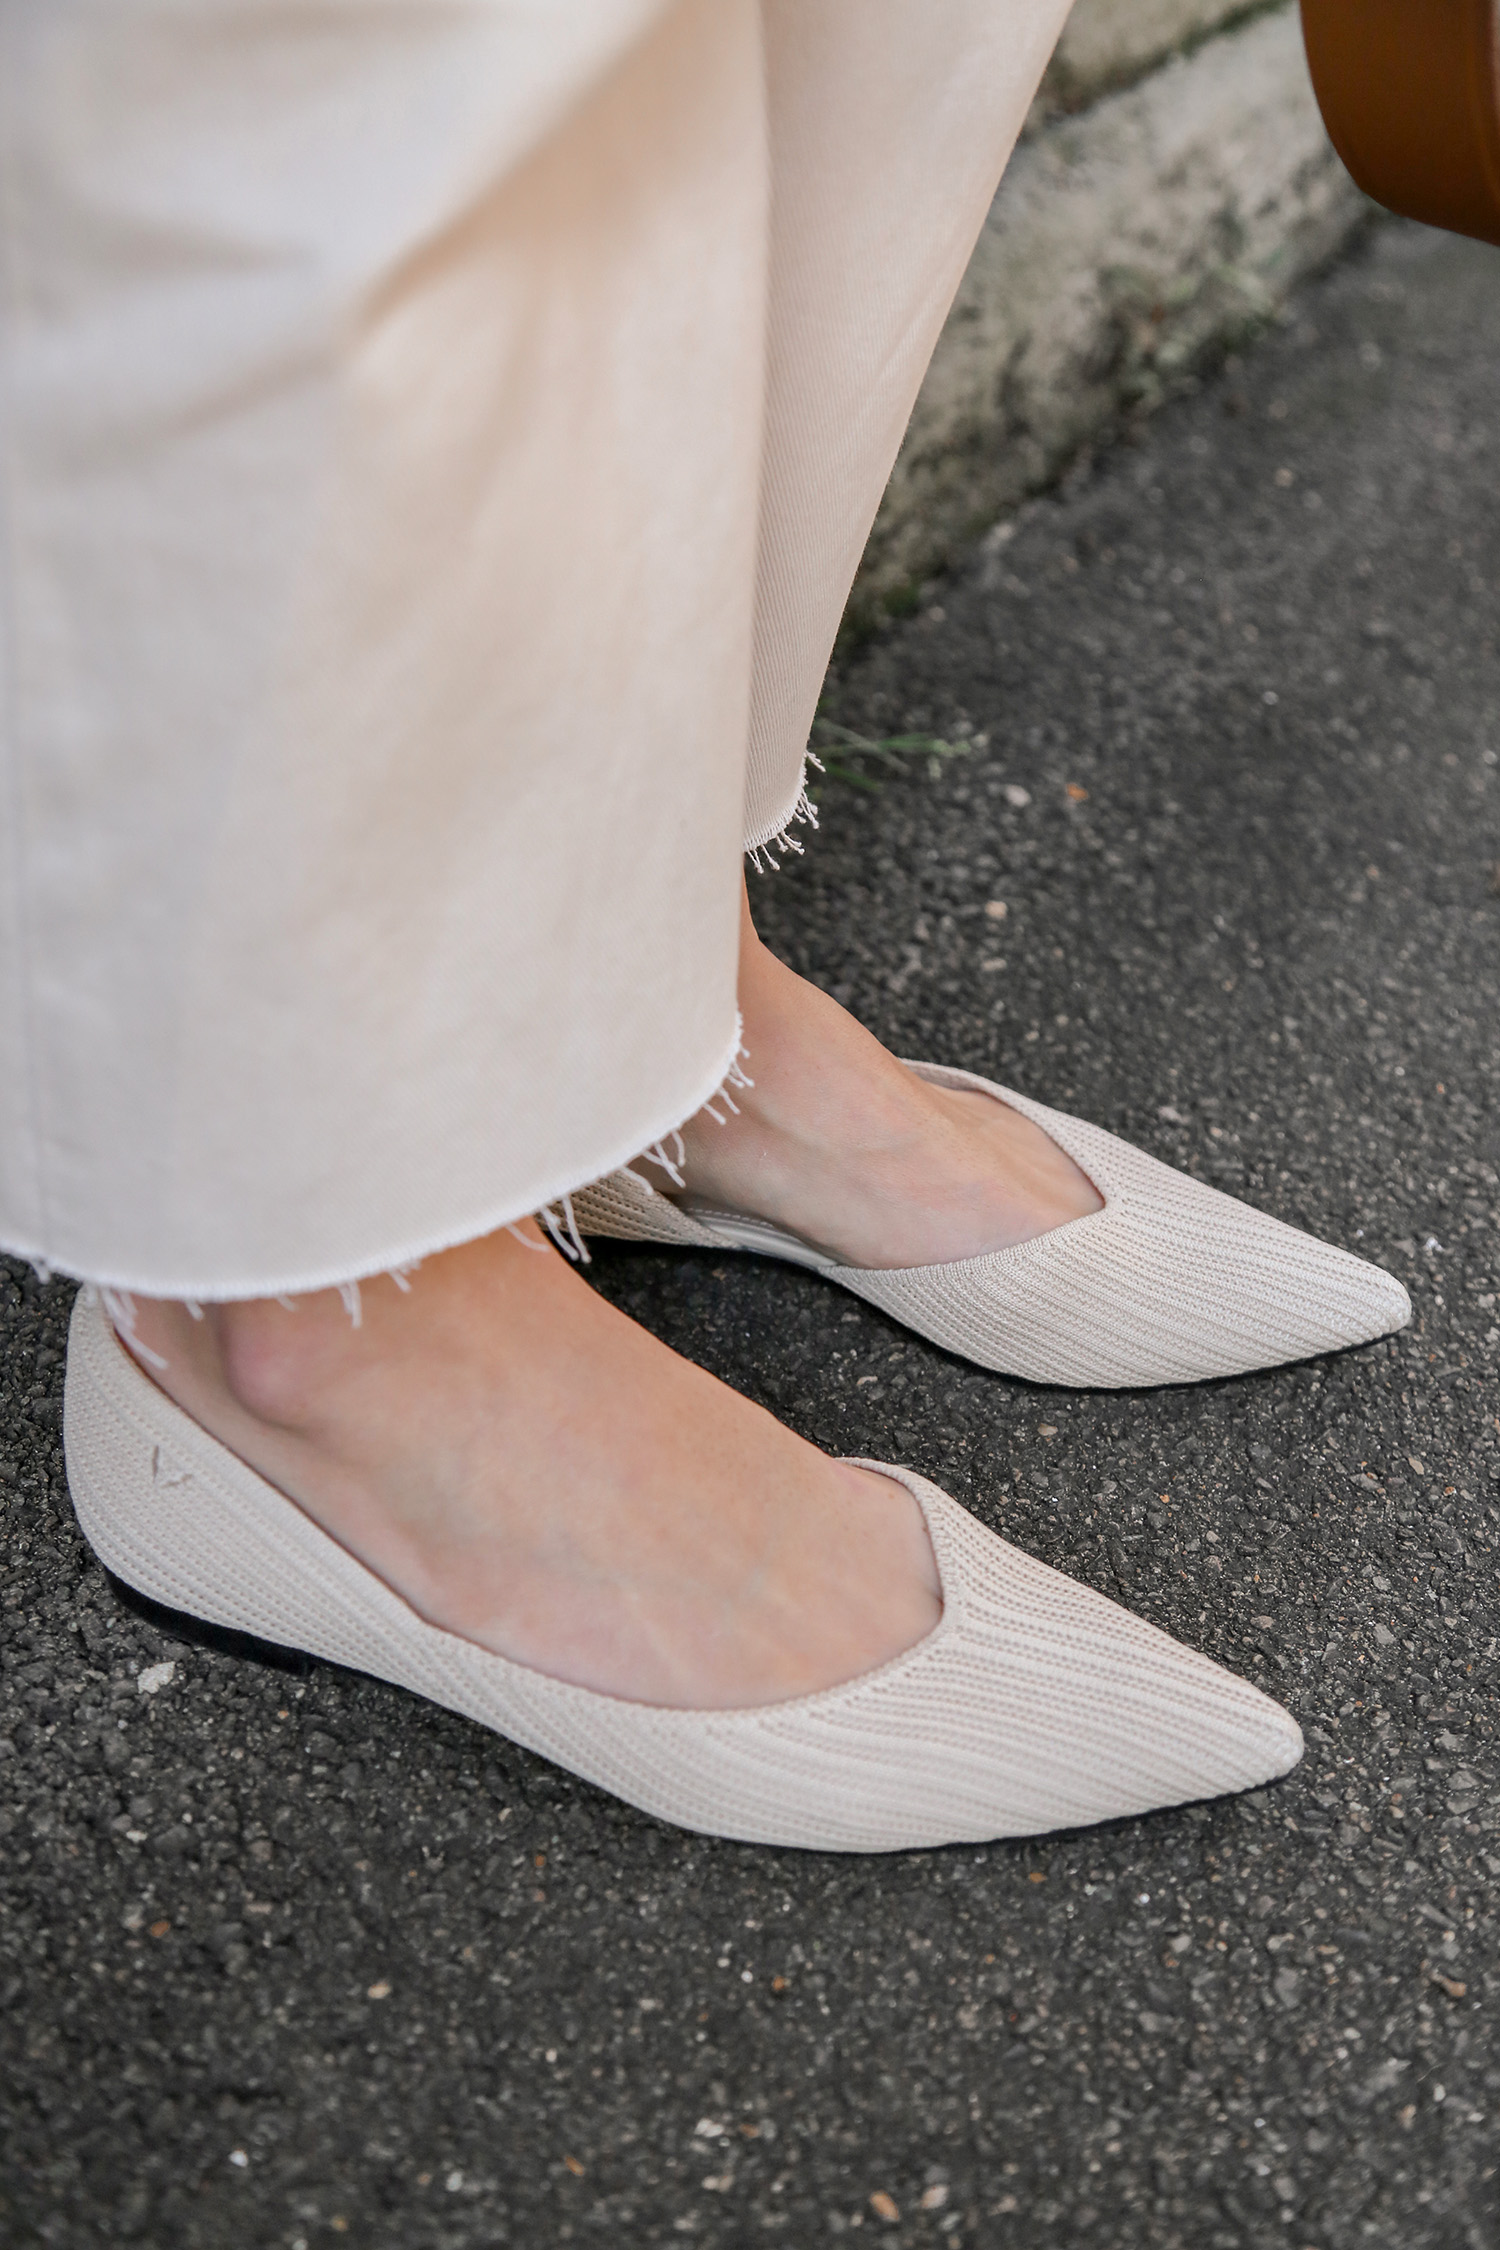 VIVAIA Melia Pointed Toe Shoe Review